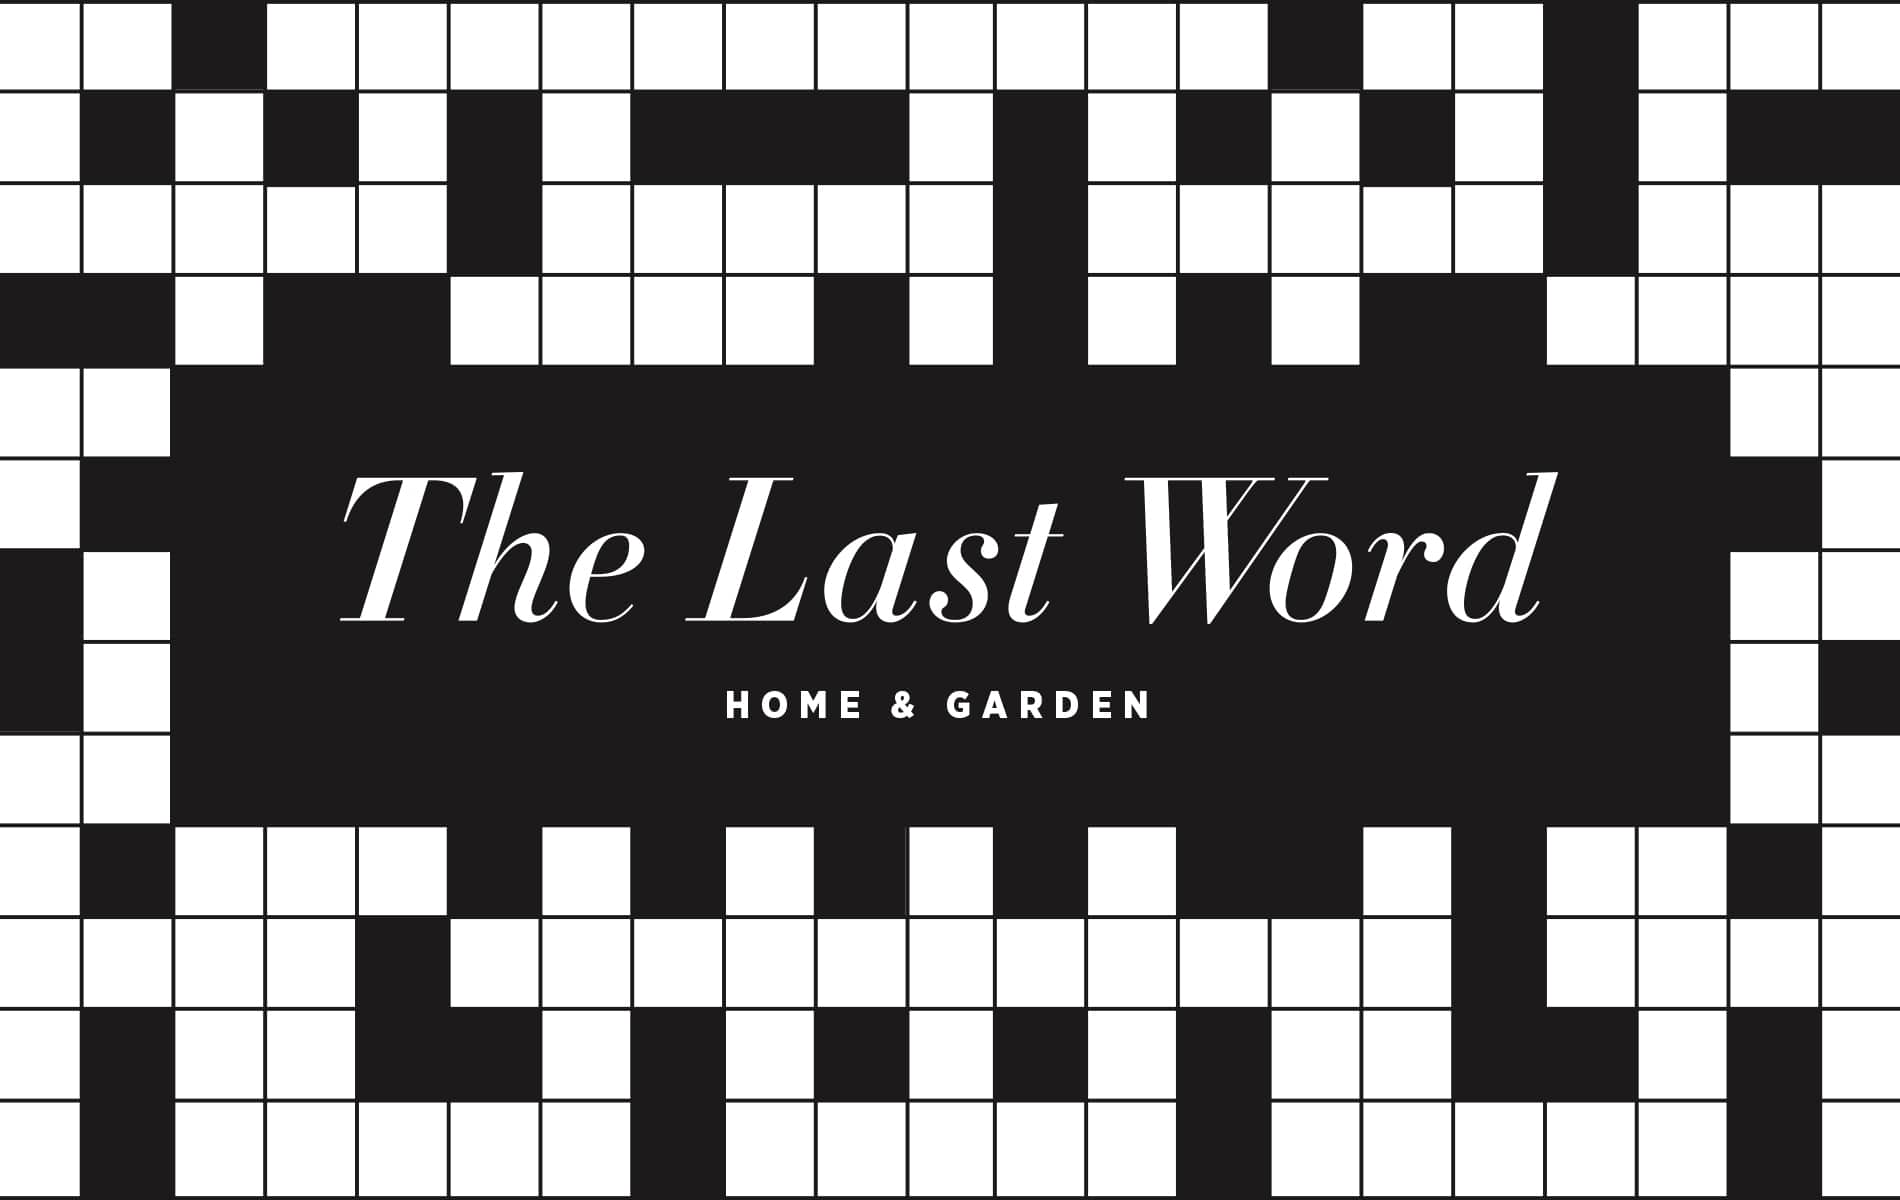 VIE Magazine October 2019 Home & Garden Issue Crossword Puzzle